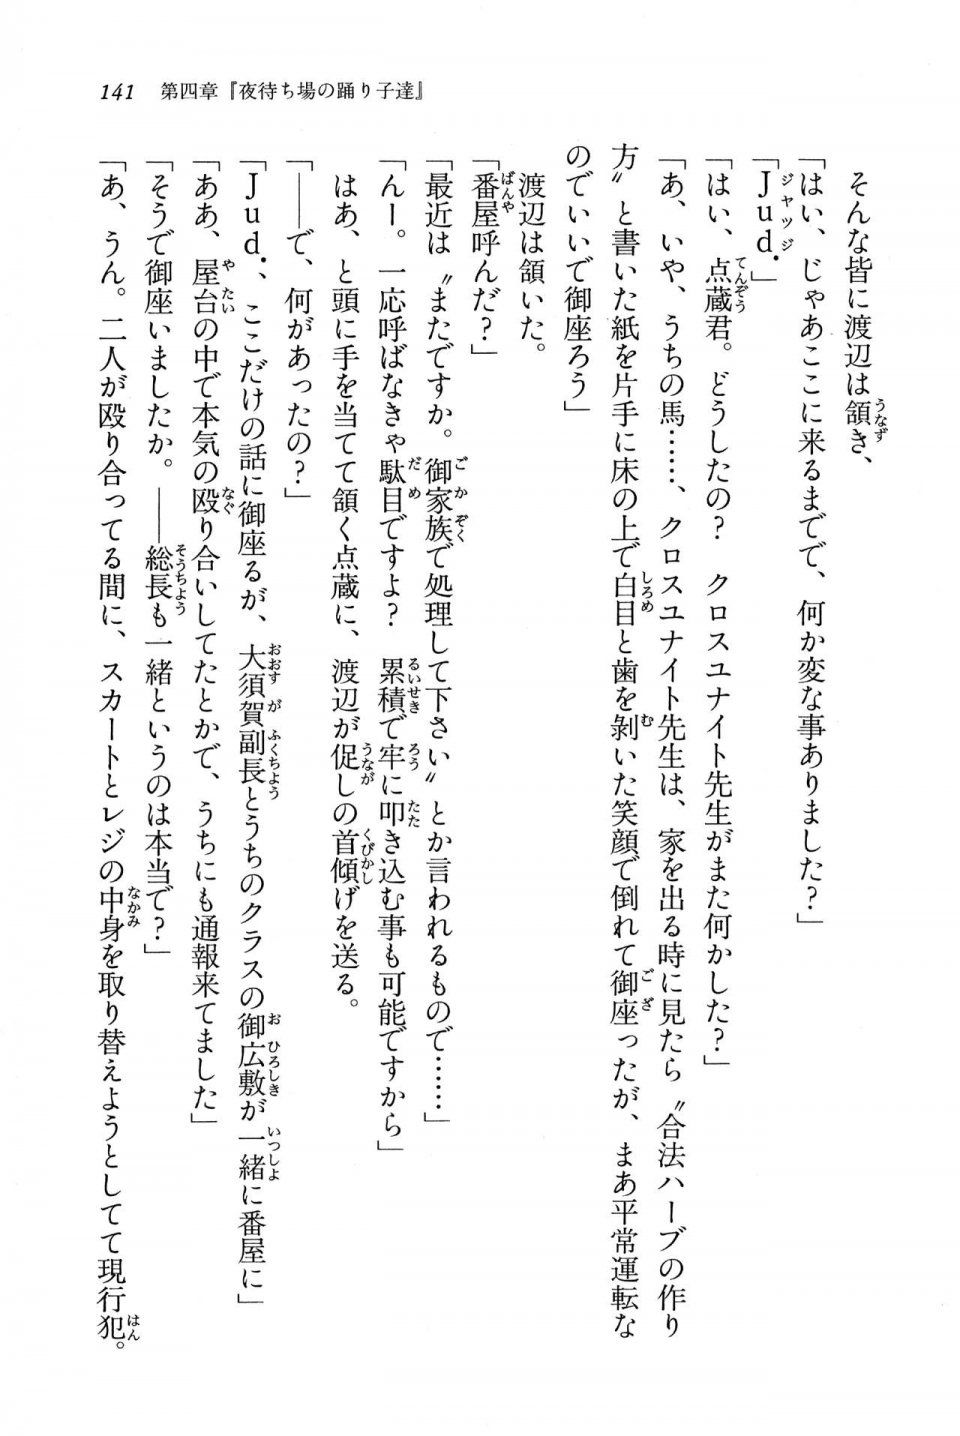 Kyoukai Senjou no Horizon BD Special Mininovel Vol 7(4A) - Photo #145